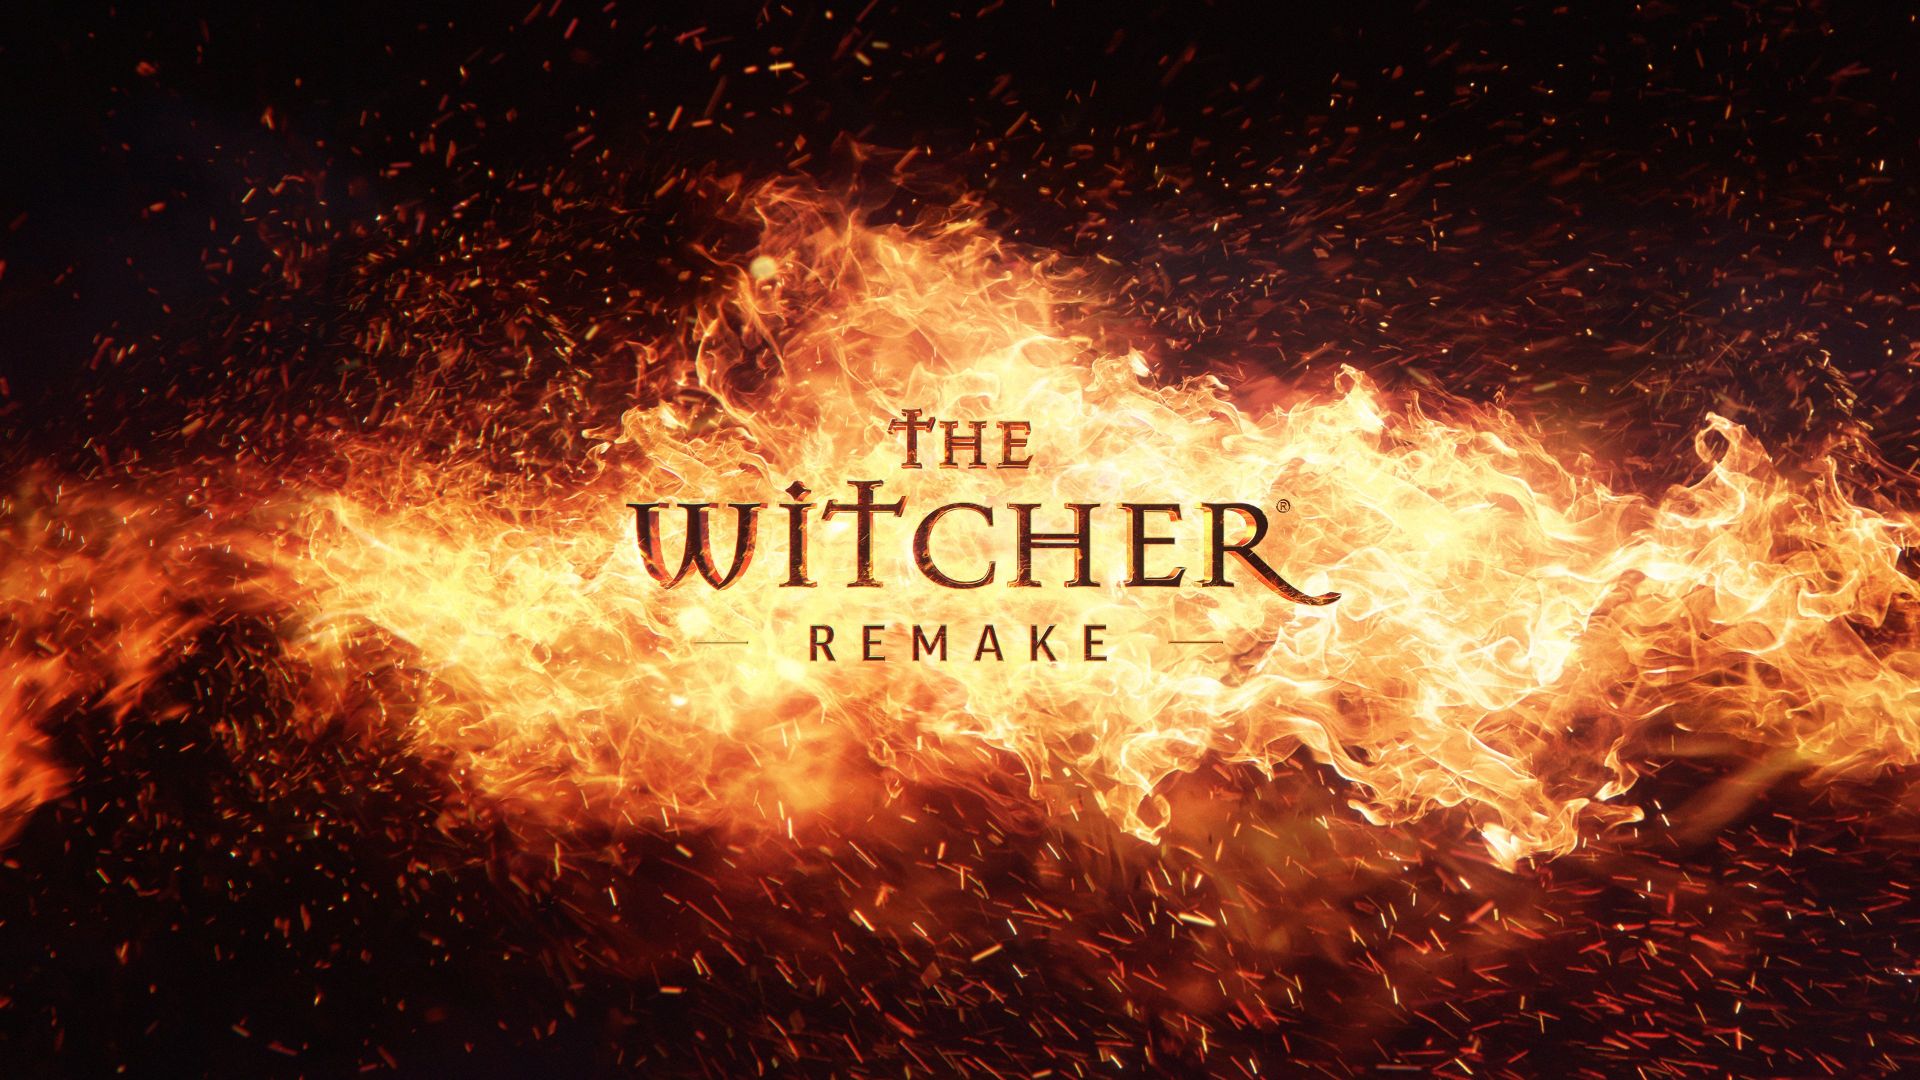 CD Projekt RED เผย! The Witcher เวอร์ชั่น Remake จะเป็นแบบ Open World ไม่เหมือนกับตัวต้นฉบับ